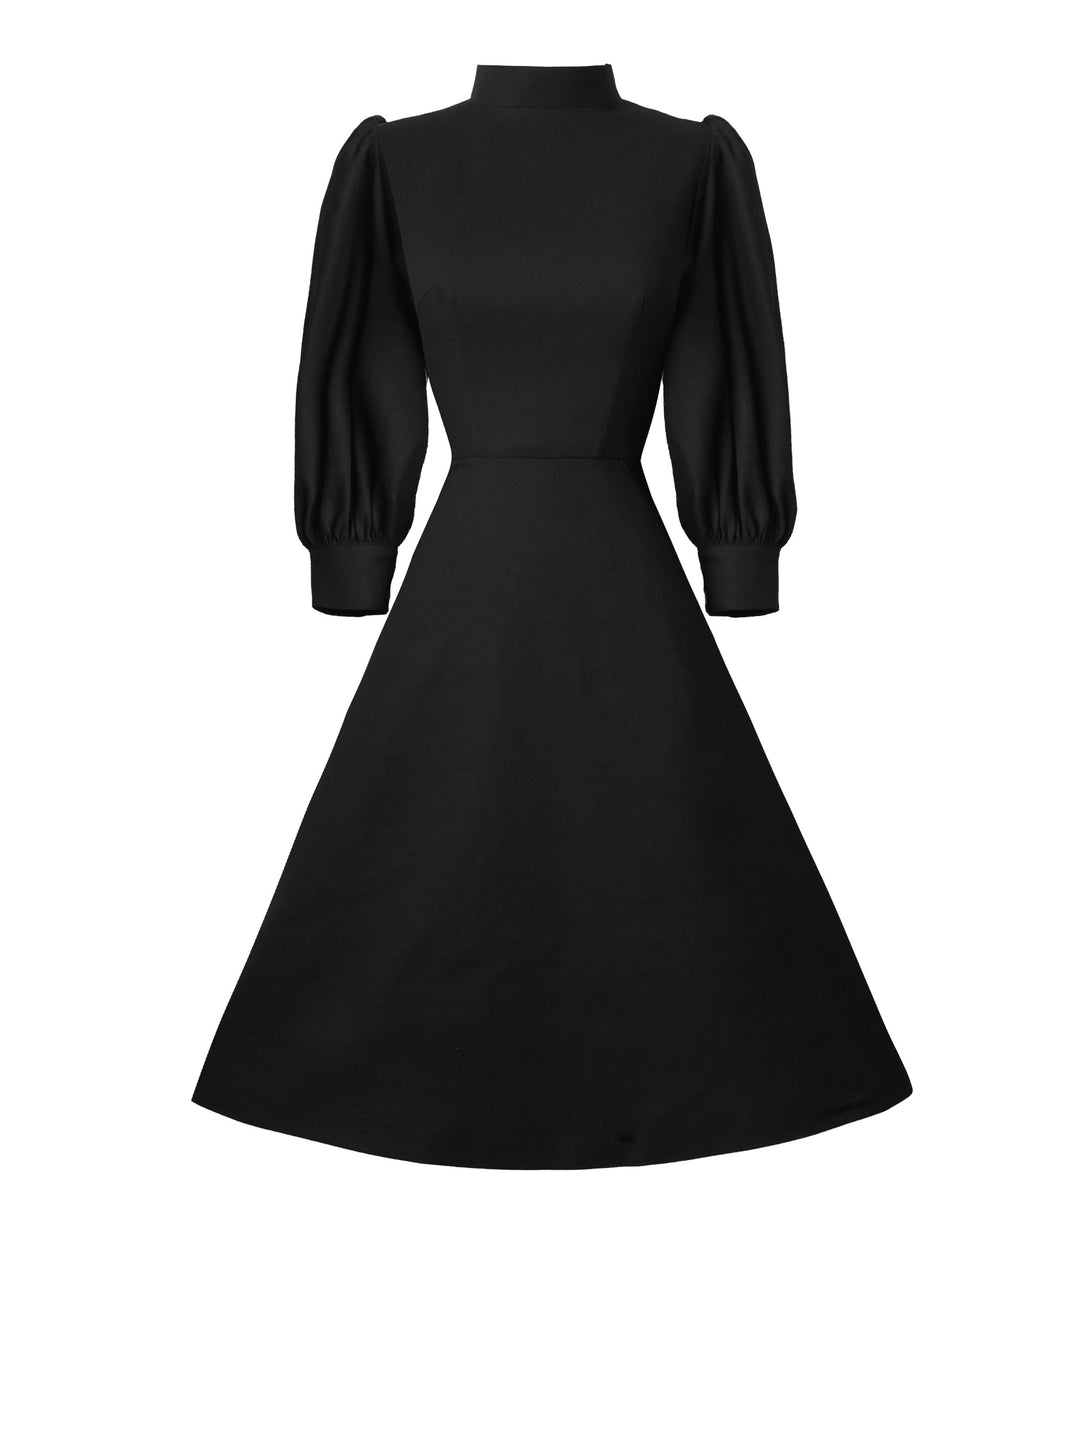 RTS - Size S - Beatrix Dress in Midnight Black Linen